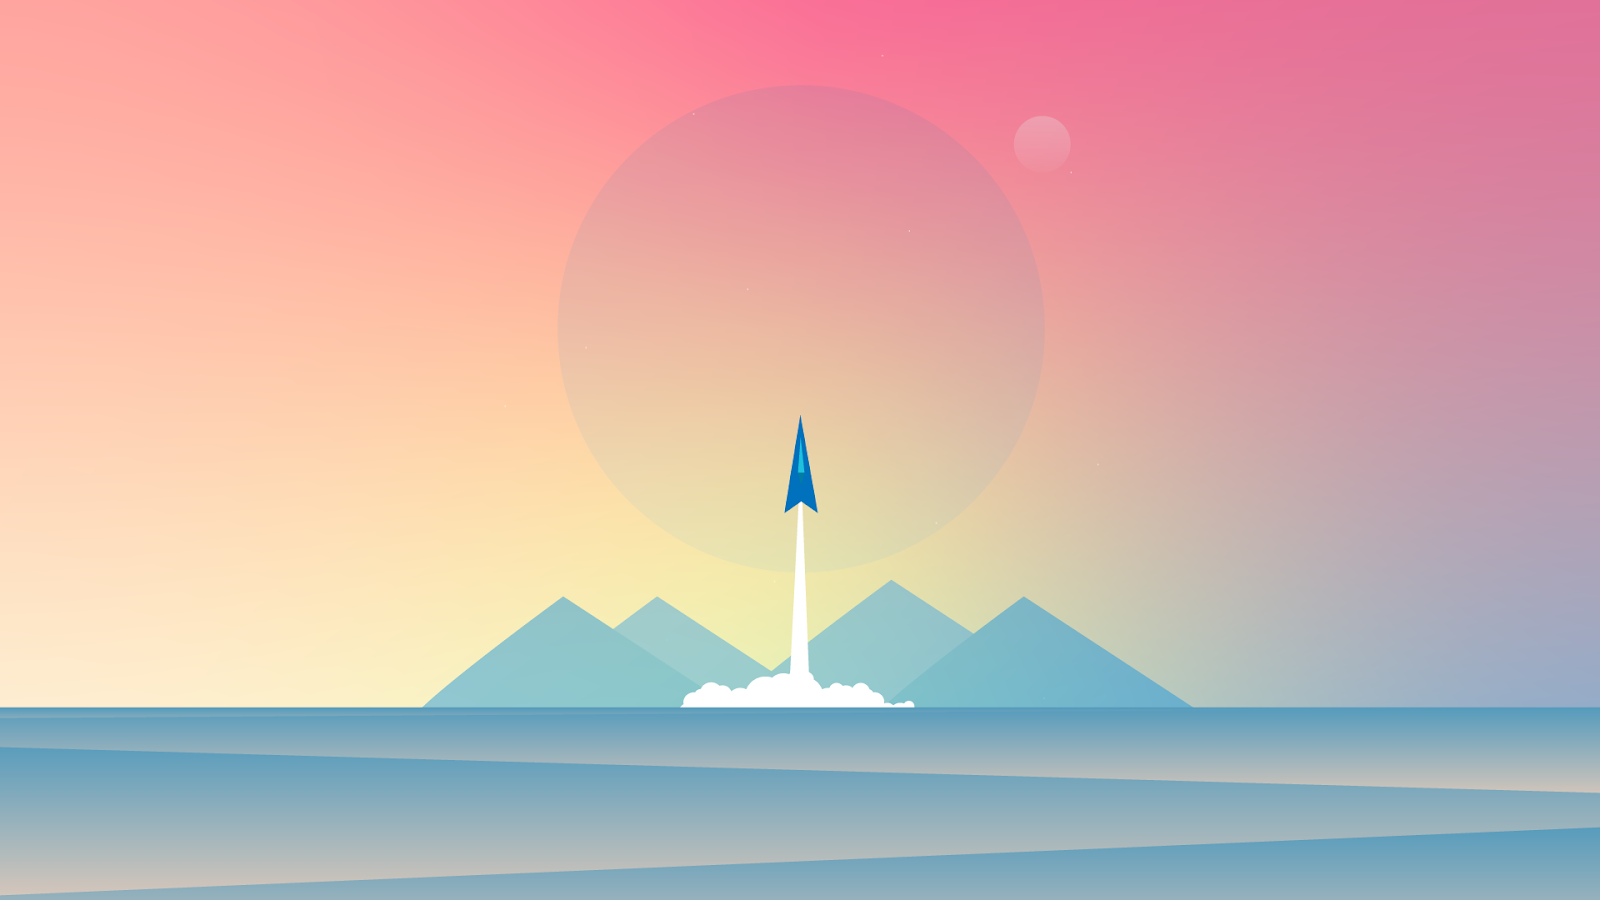 Rocket Launch On Alien Planet IPhone Wallpaper  IPhone Wallpapers  iPhone  Wallpapers